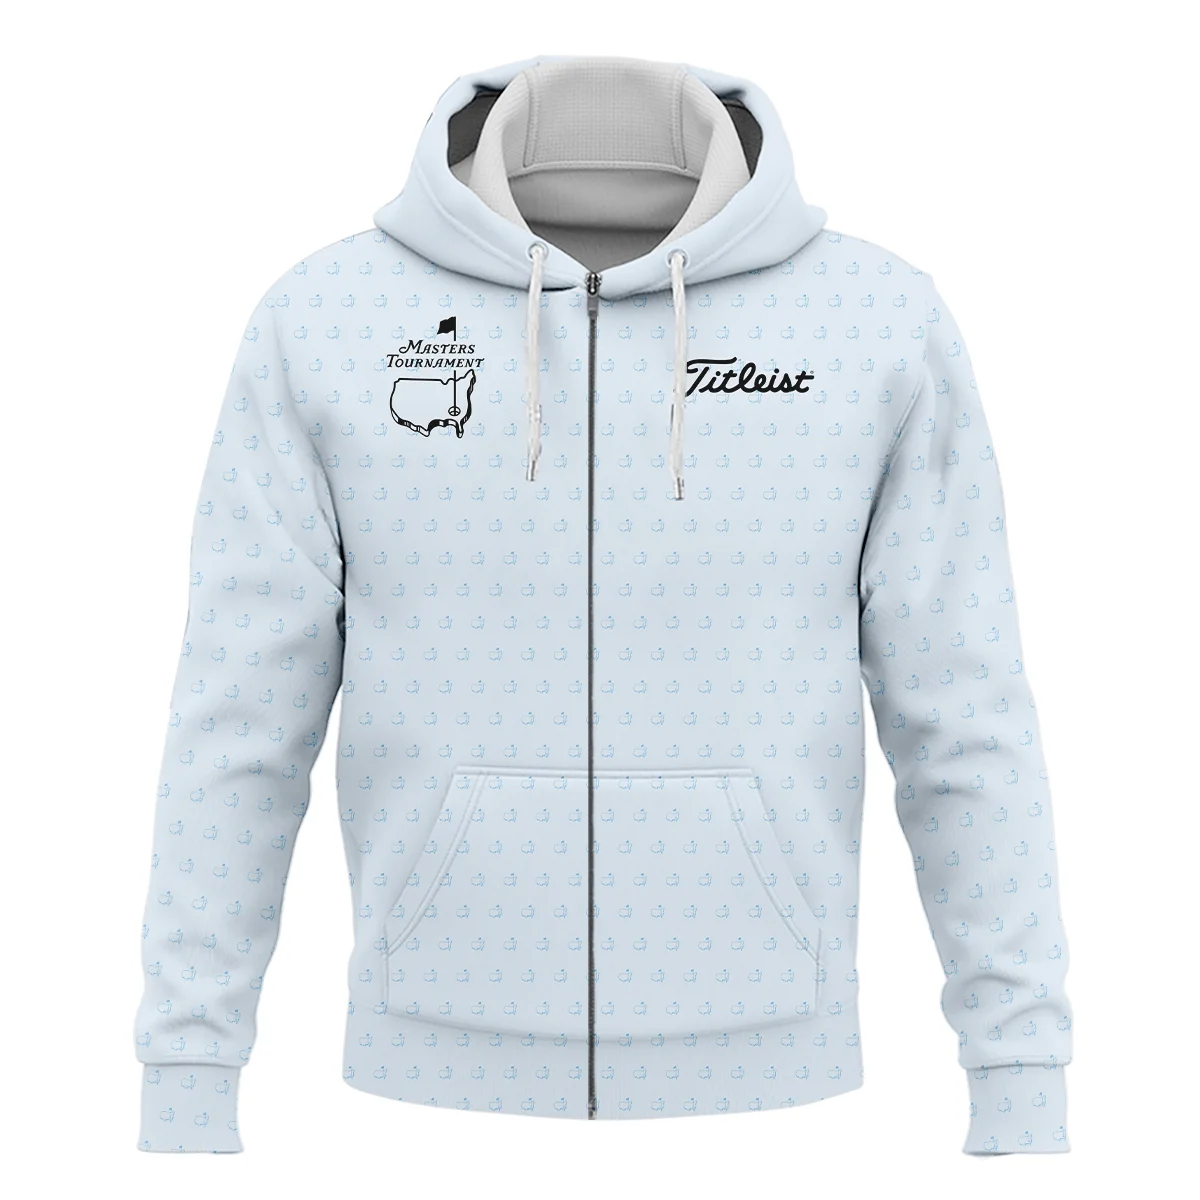 Pattern Masters Tournament Titleist Unisex Sweatshirt White Light Blue Color Pattern Logo  Sweatshirt